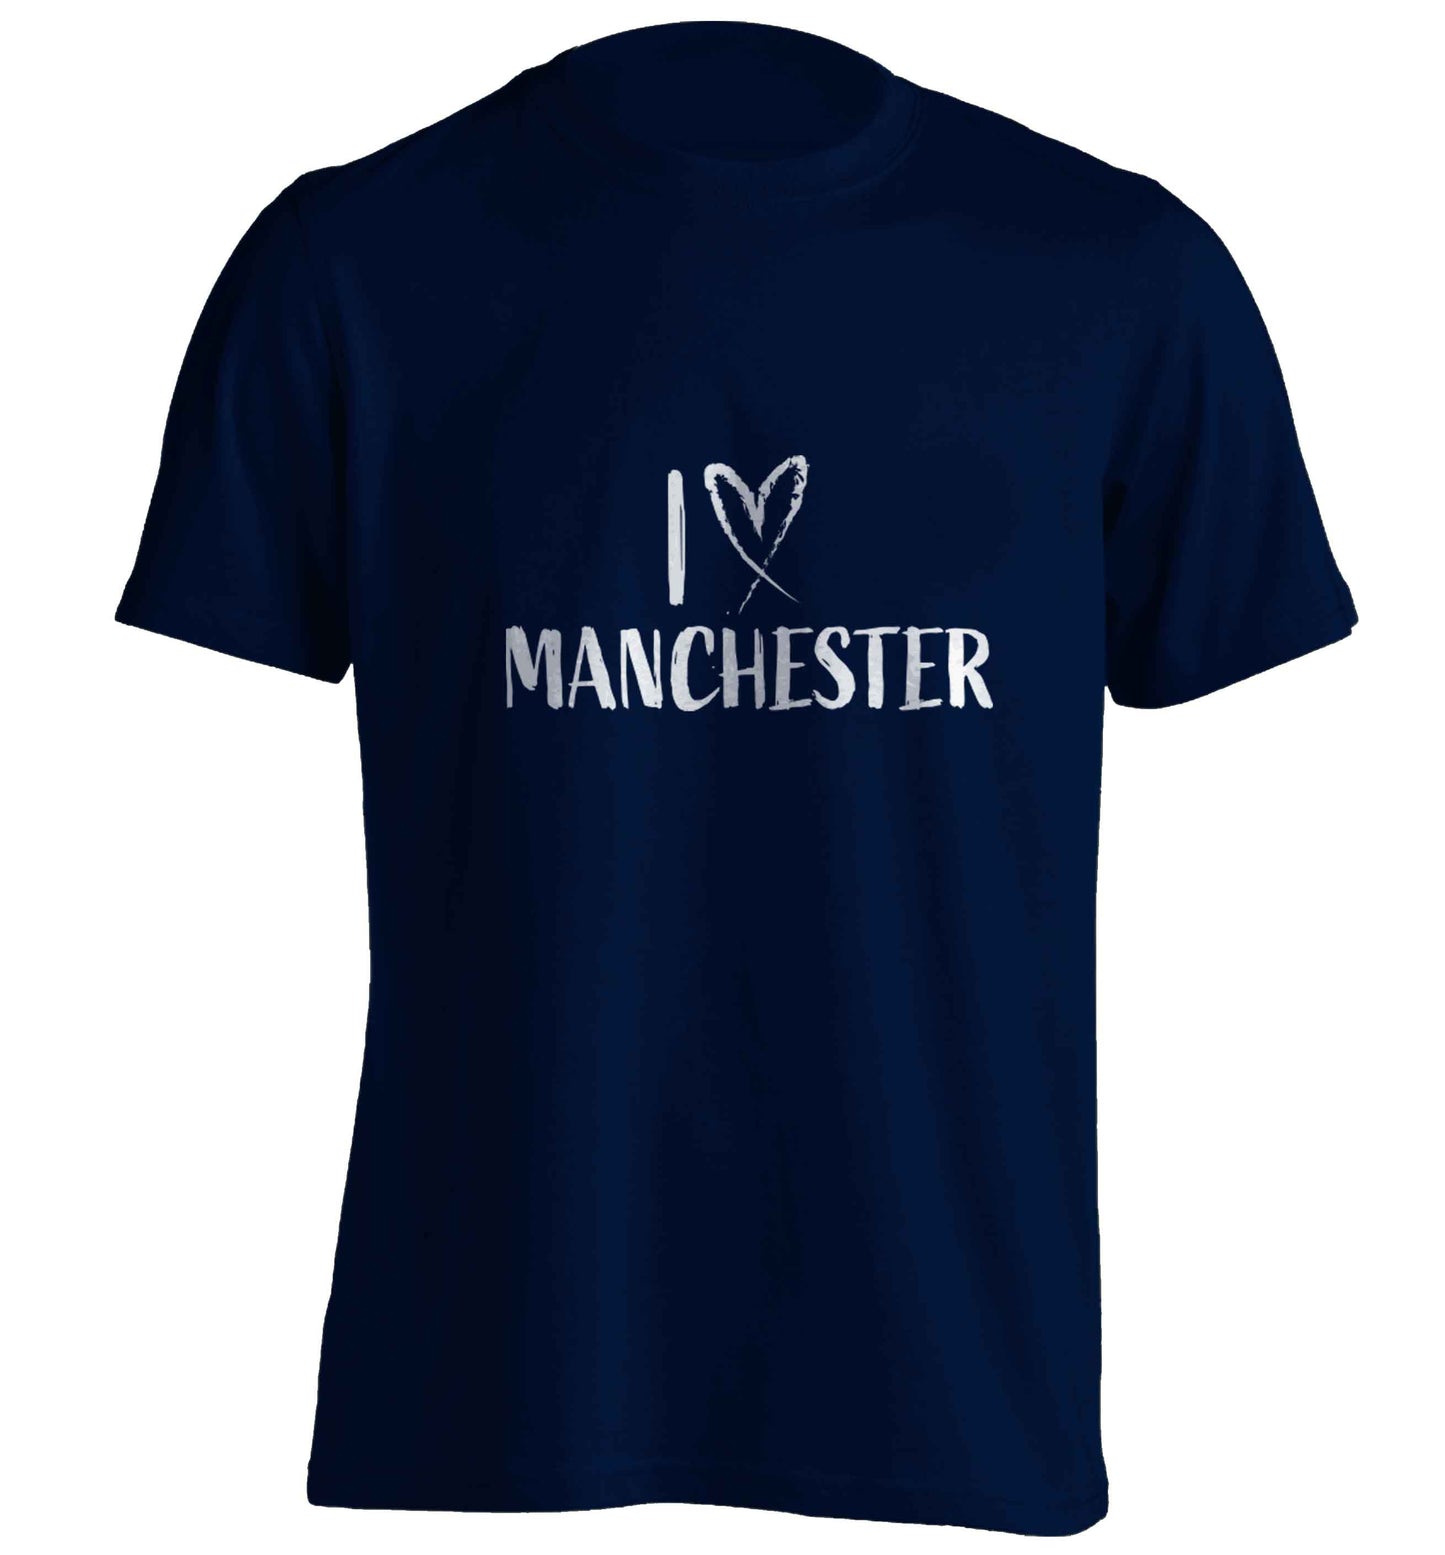 I love Manchester adults unisex navy Tshirt 2XL